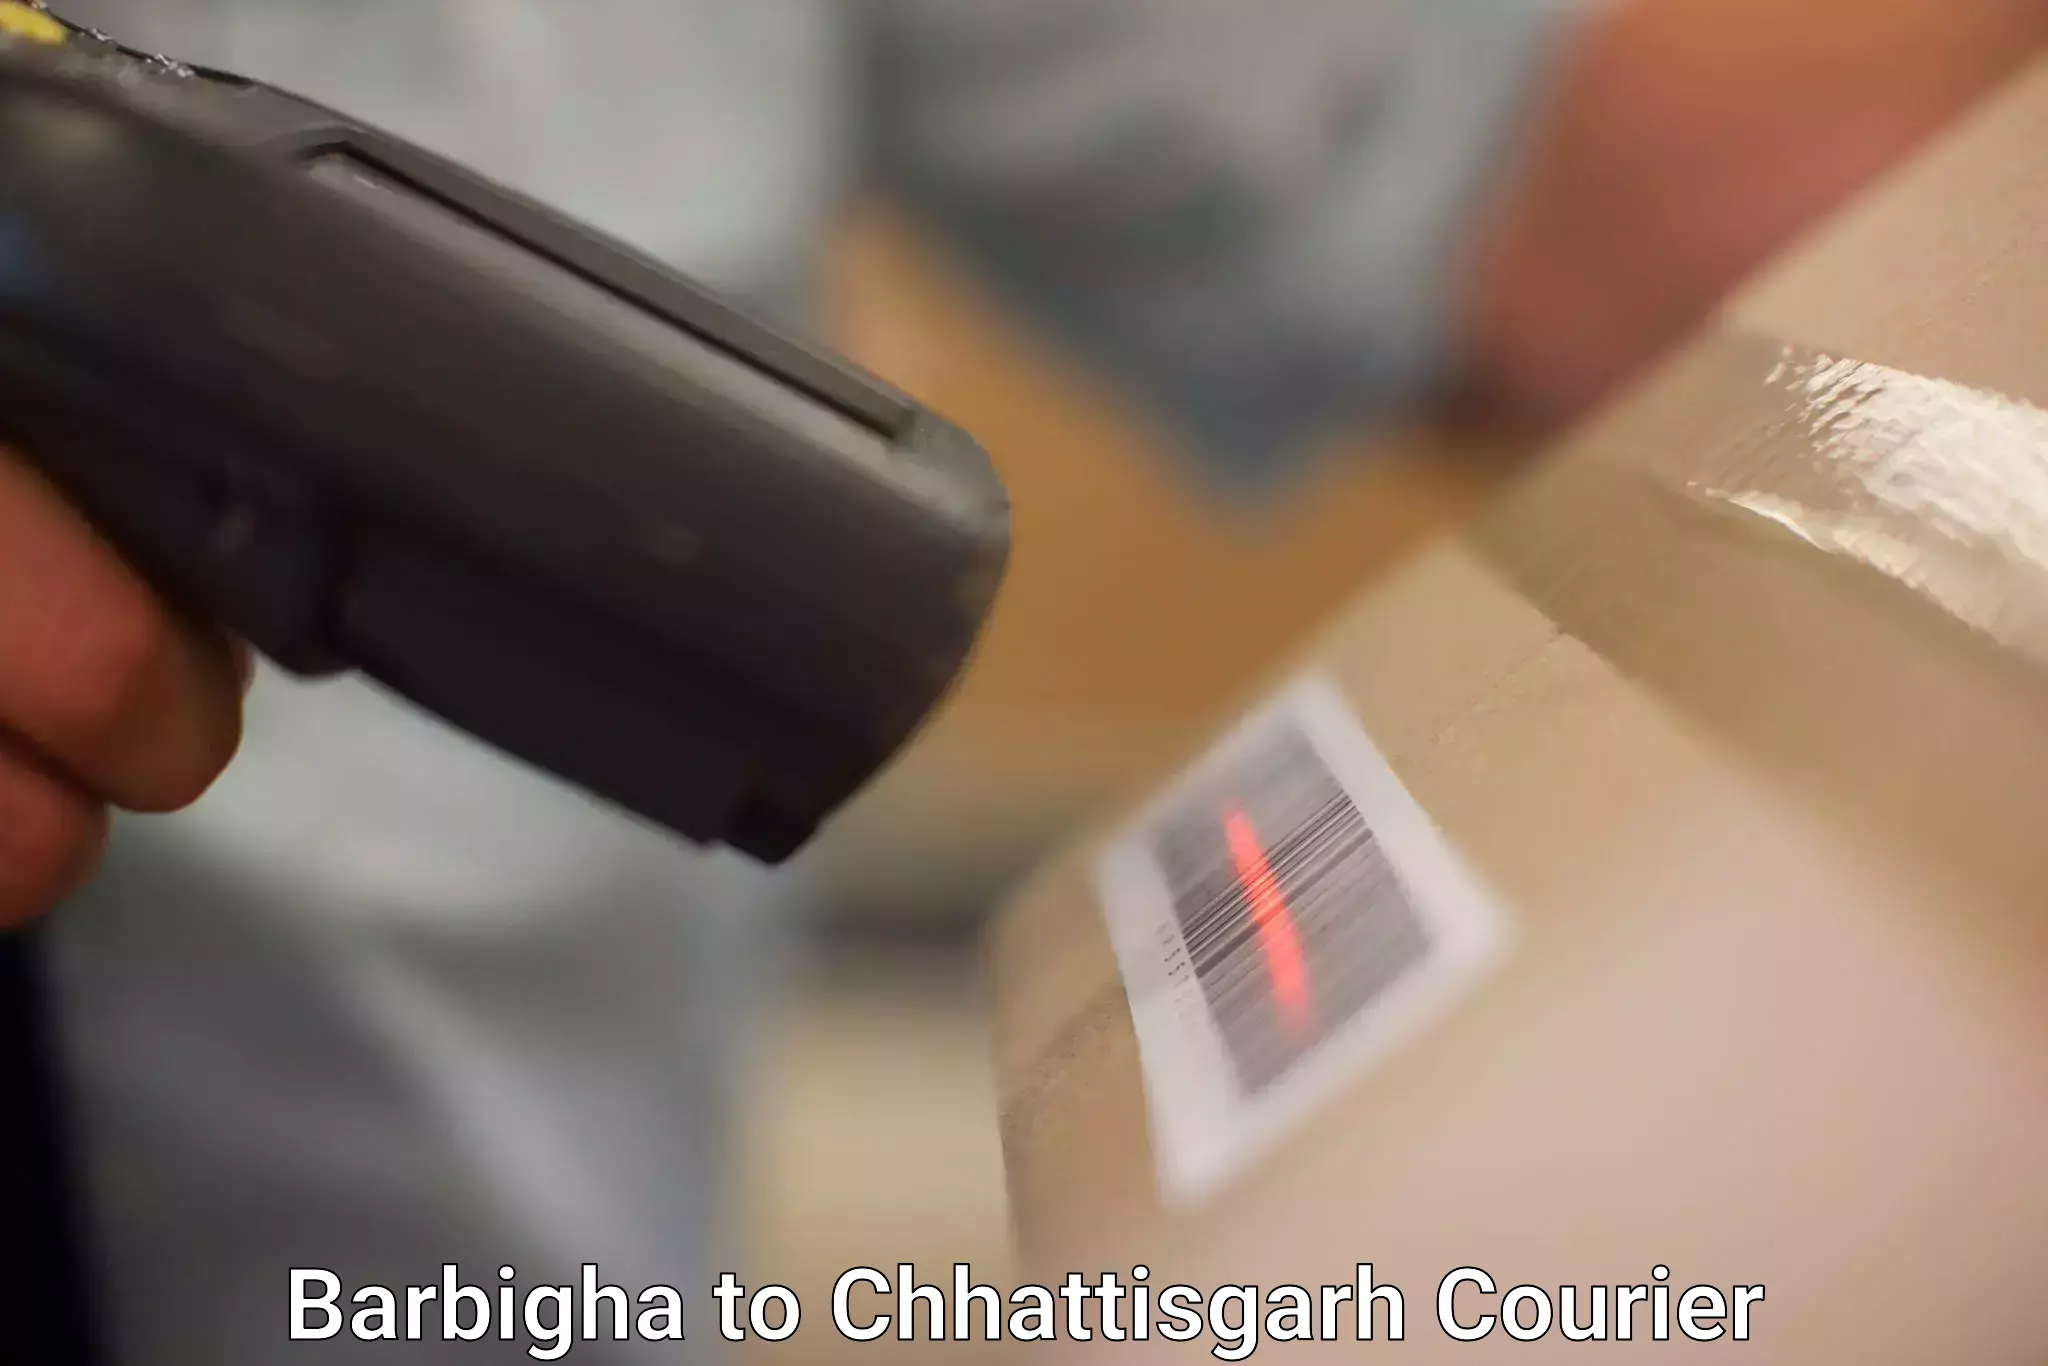 Express delivery capabilities in Barbigha to Patna Chhattisgarh